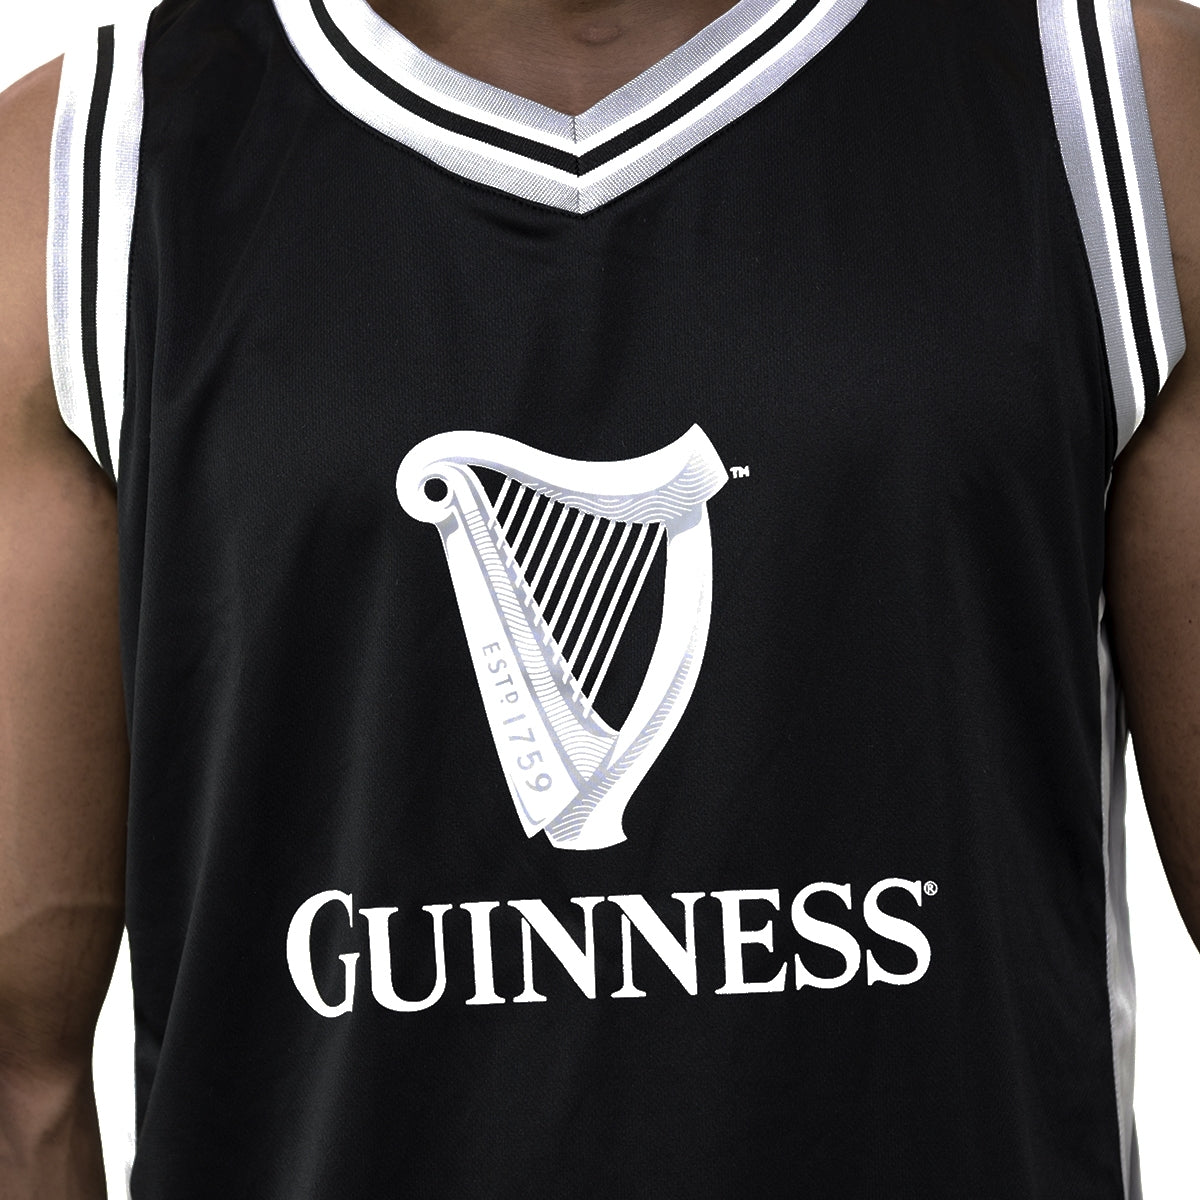 A basketball fan wearing a Guinness UK Black and Grey Basketball Jersey.